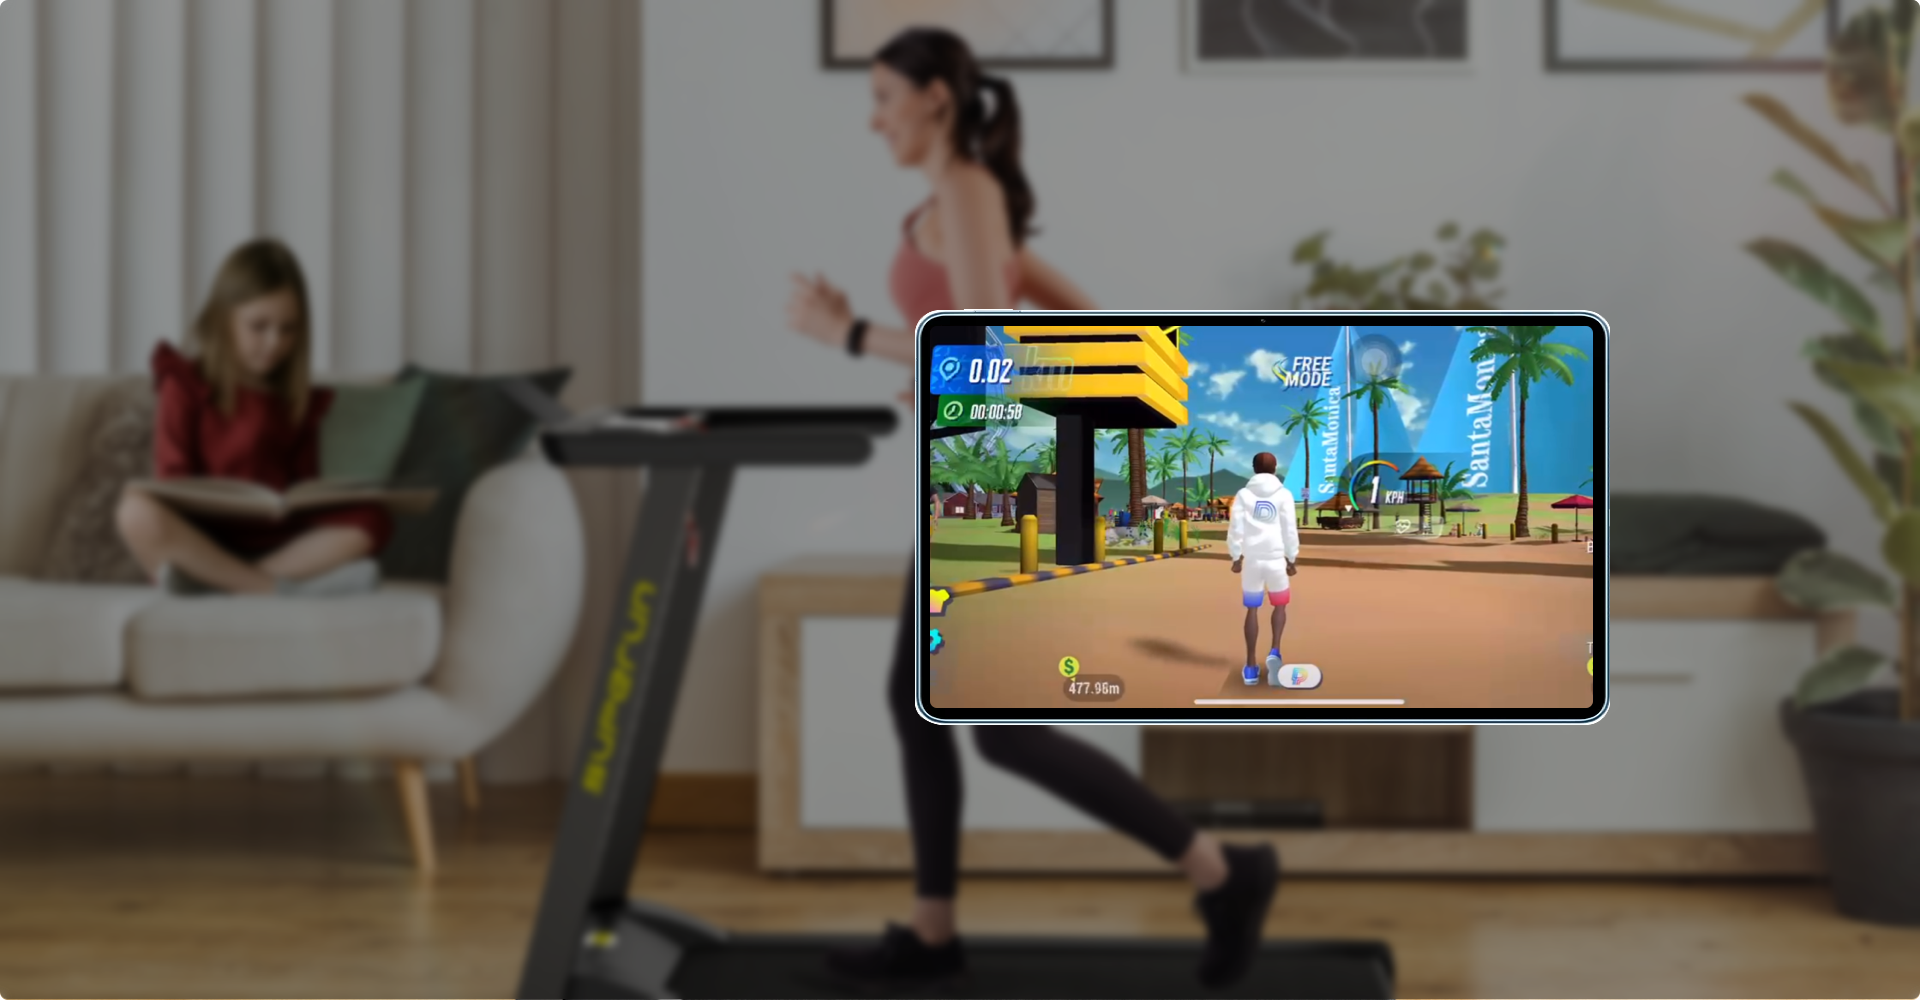 deerrun smart treadmill